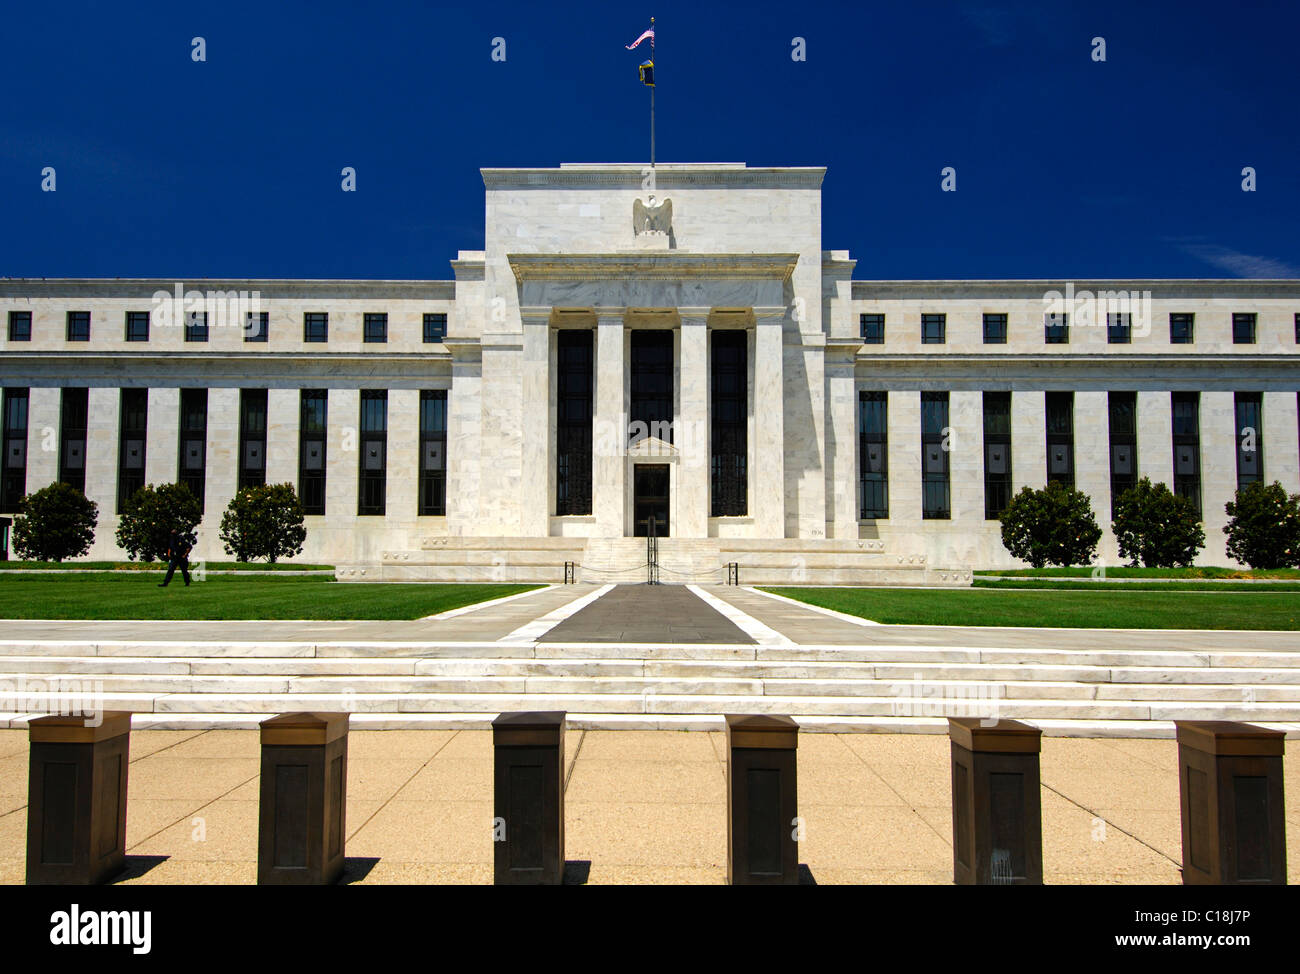 Hauptquartier der US-Notenbank Fed, Zentralbank der USA, Washington, D.C., USA Stockfoto